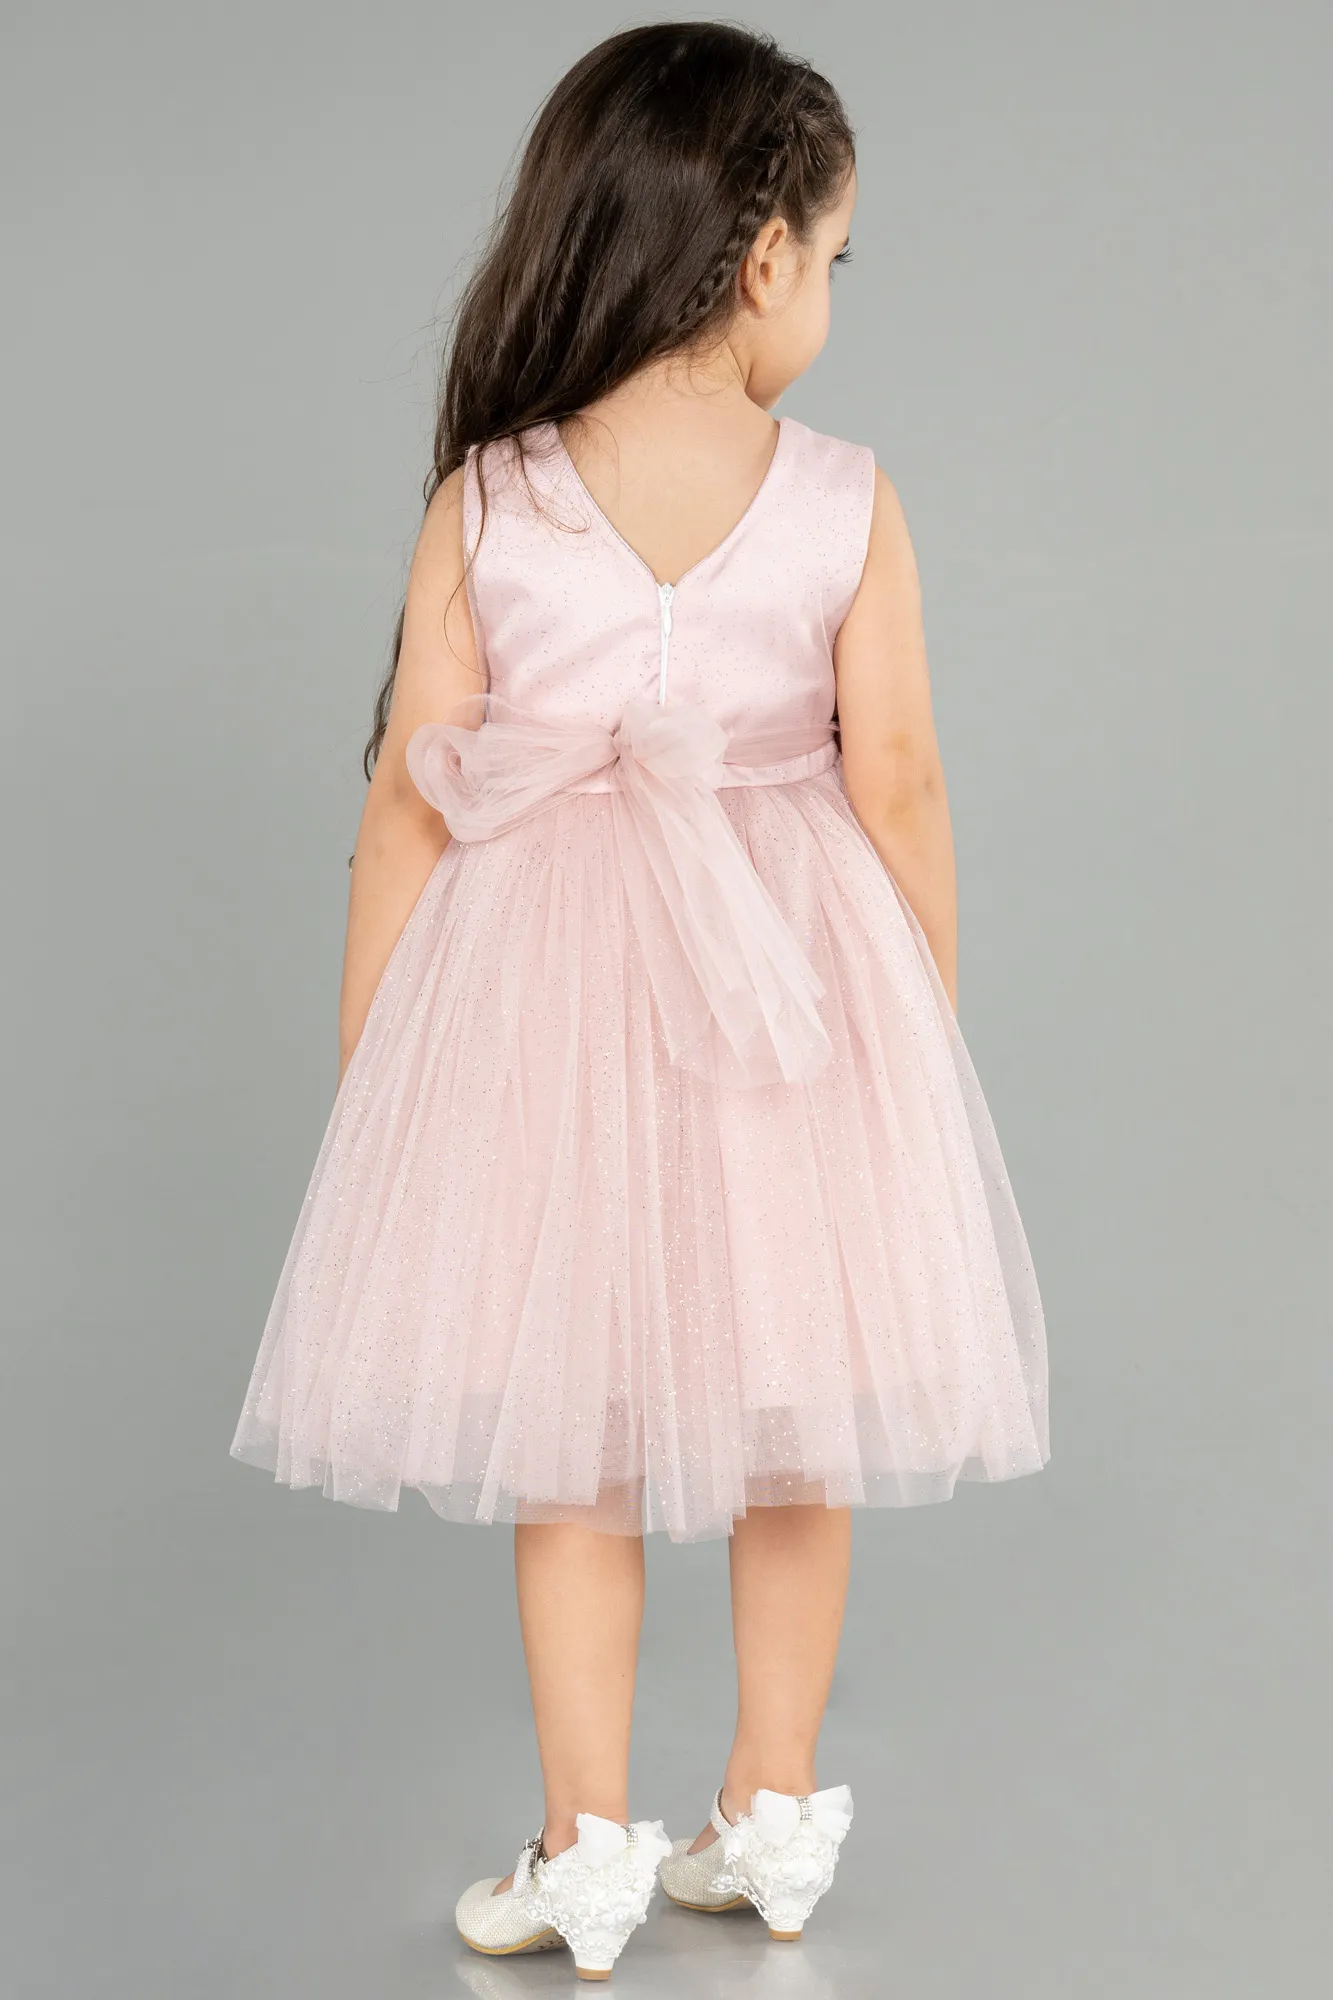 Powder Color-Short Girl Dress ABK1766